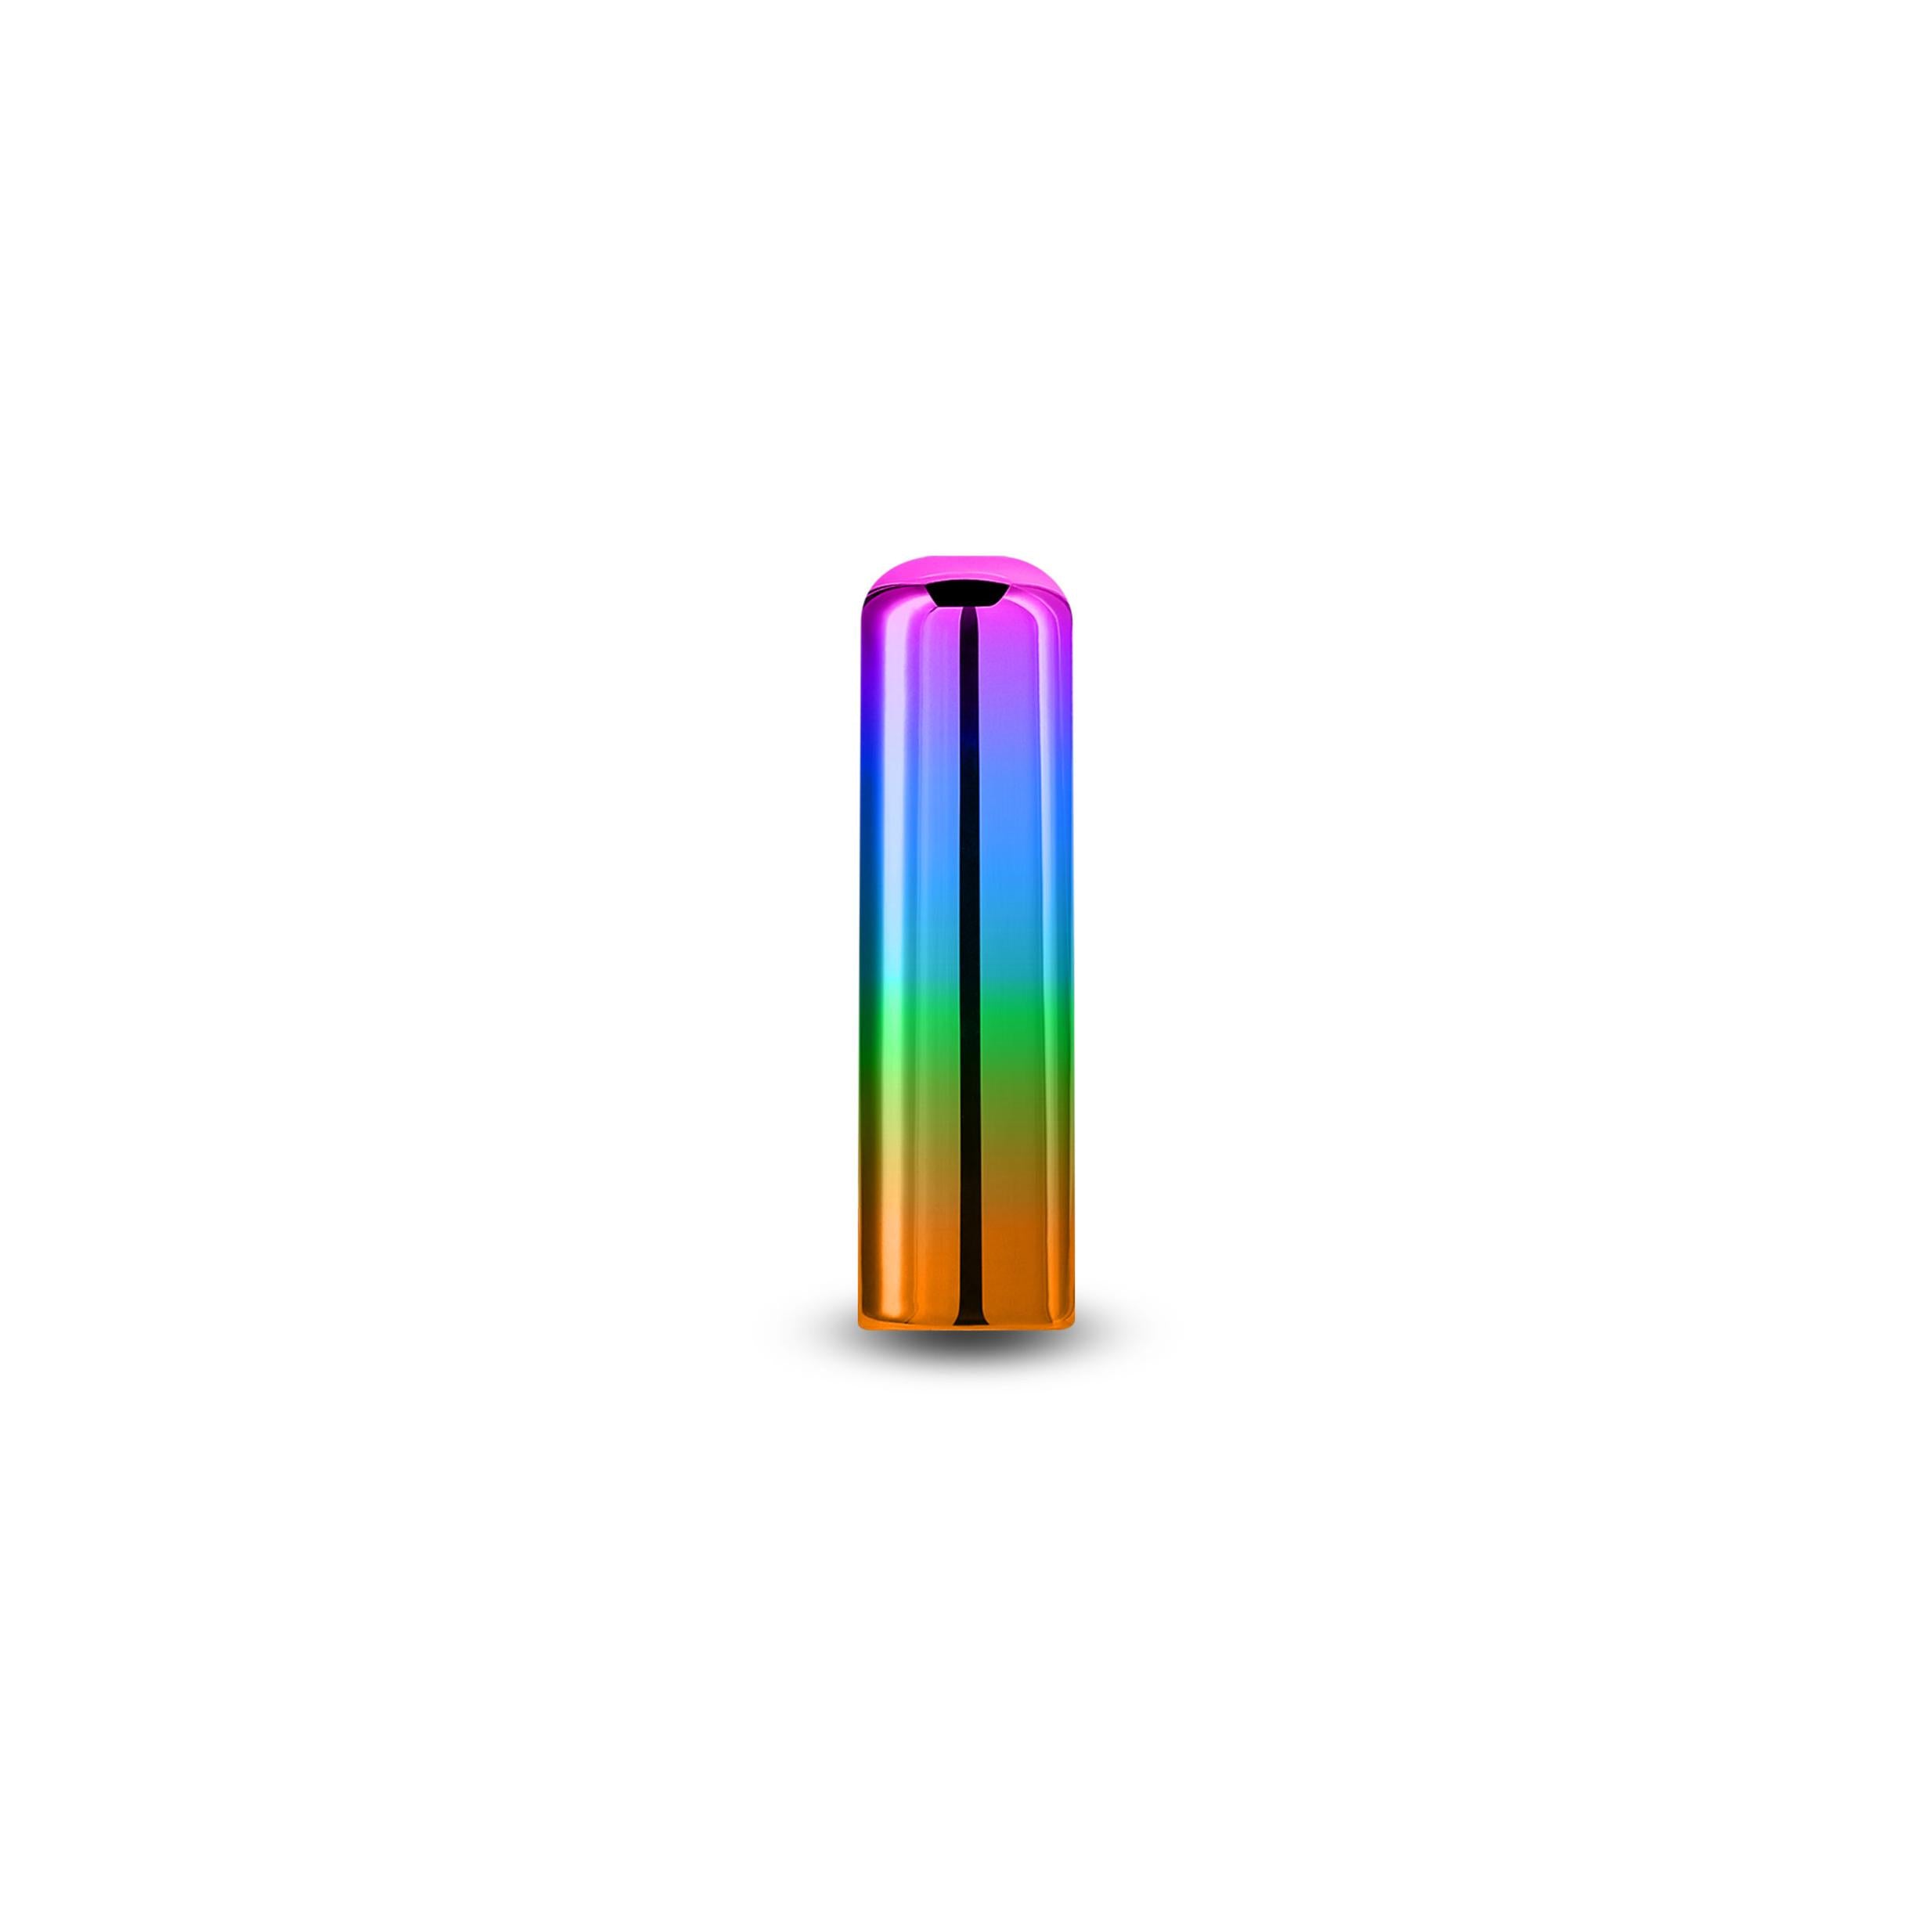 Chroma Rainbow: Slim Vibrator by NS Novelties Small